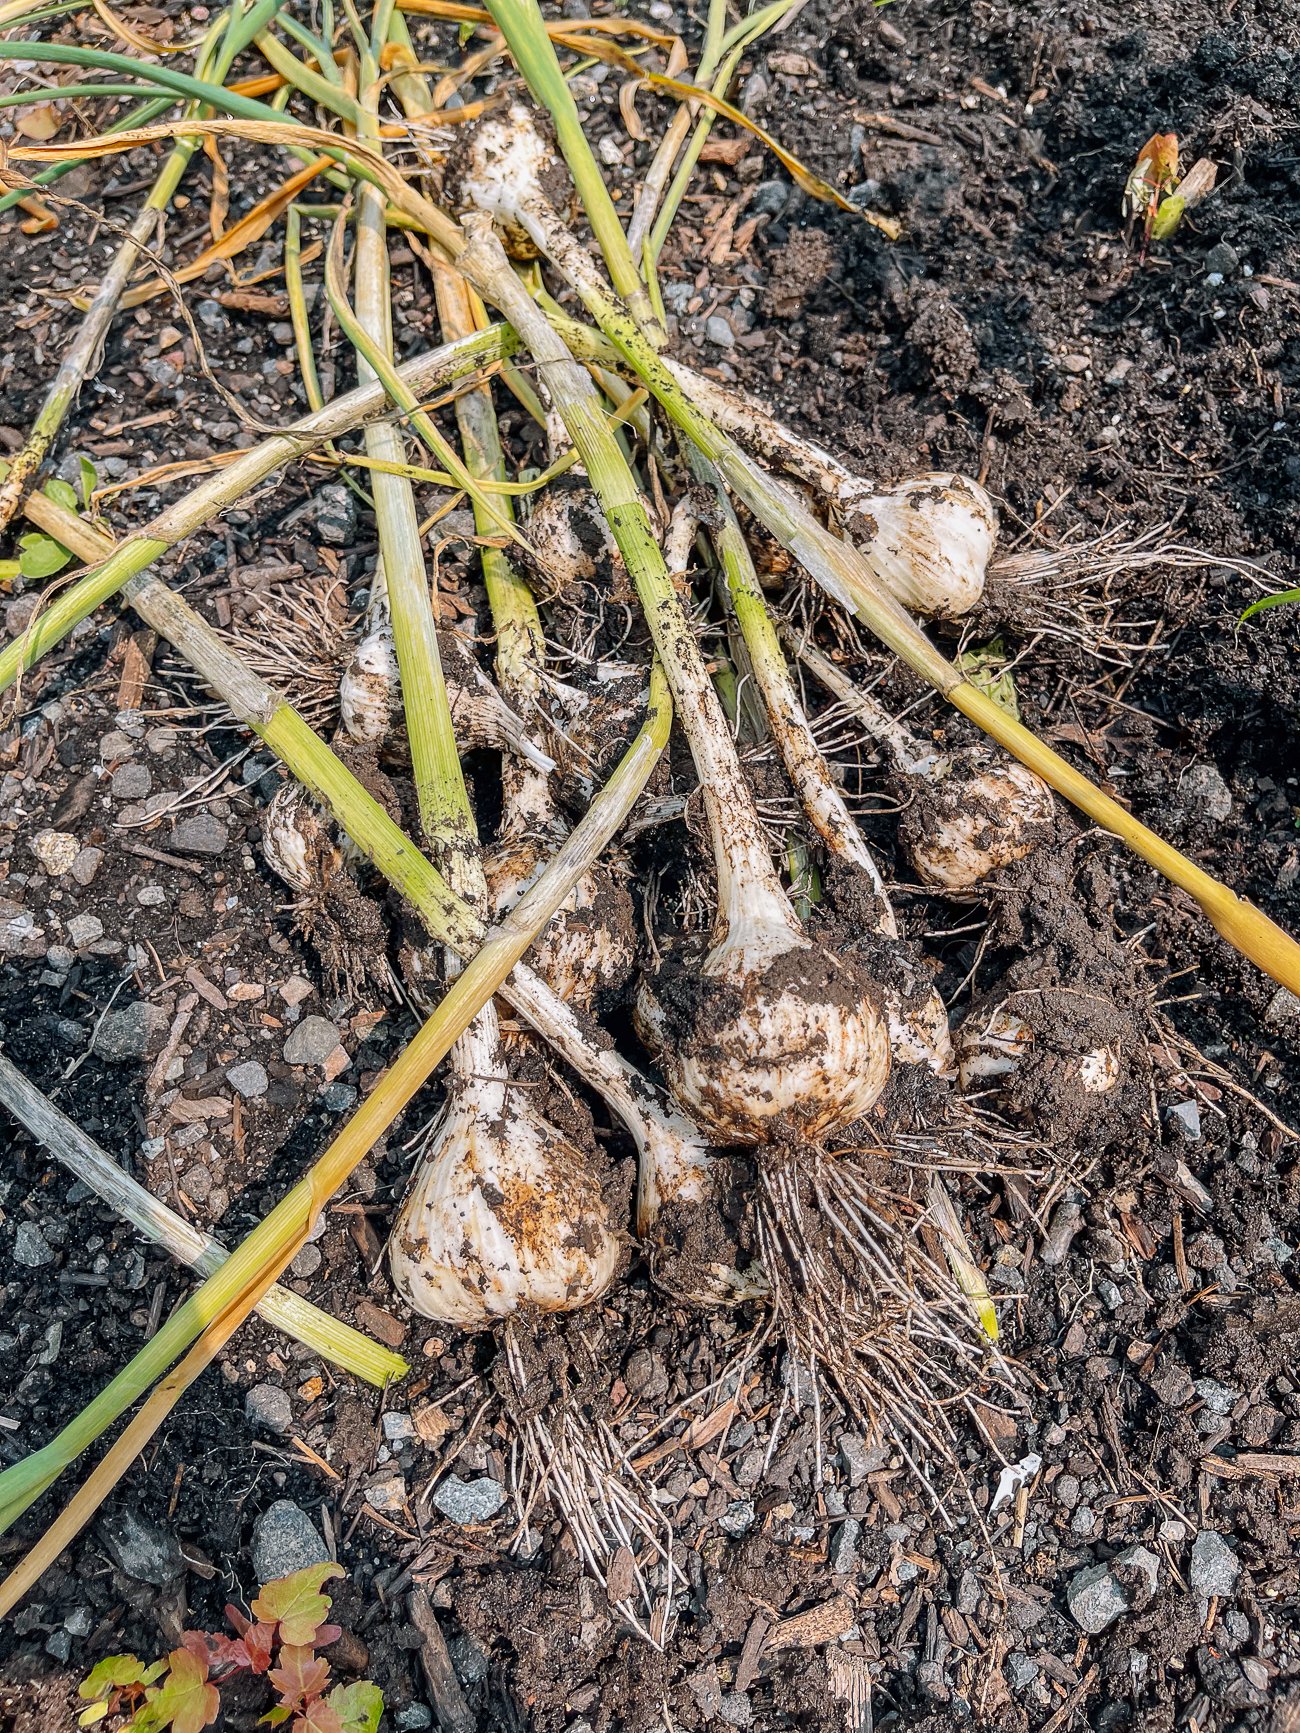 harvested garlic